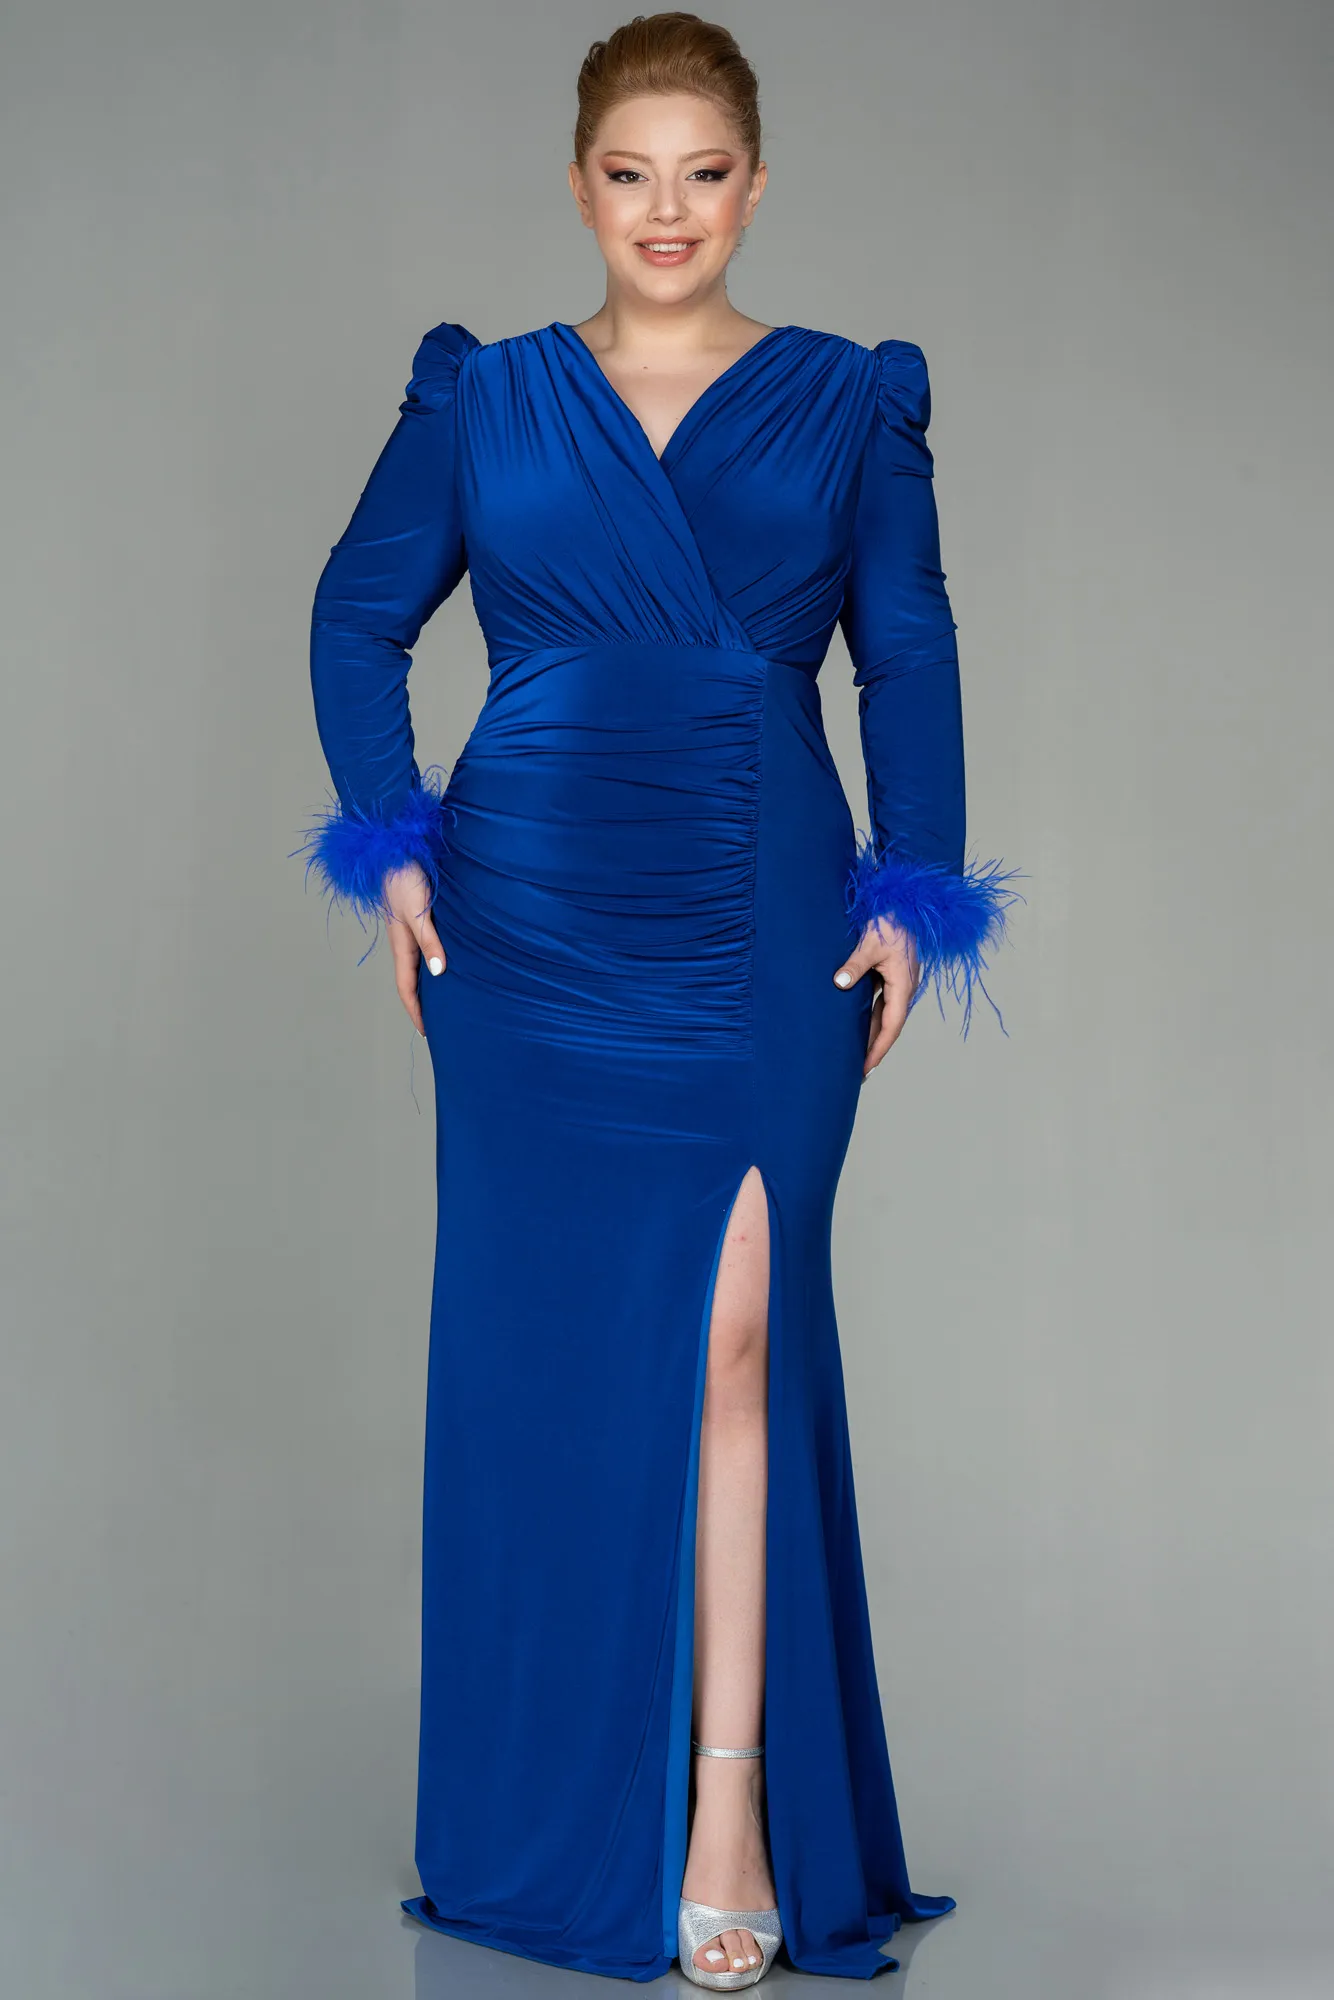 Sax Blue-Long Plus Size Evening Dress ABU2832